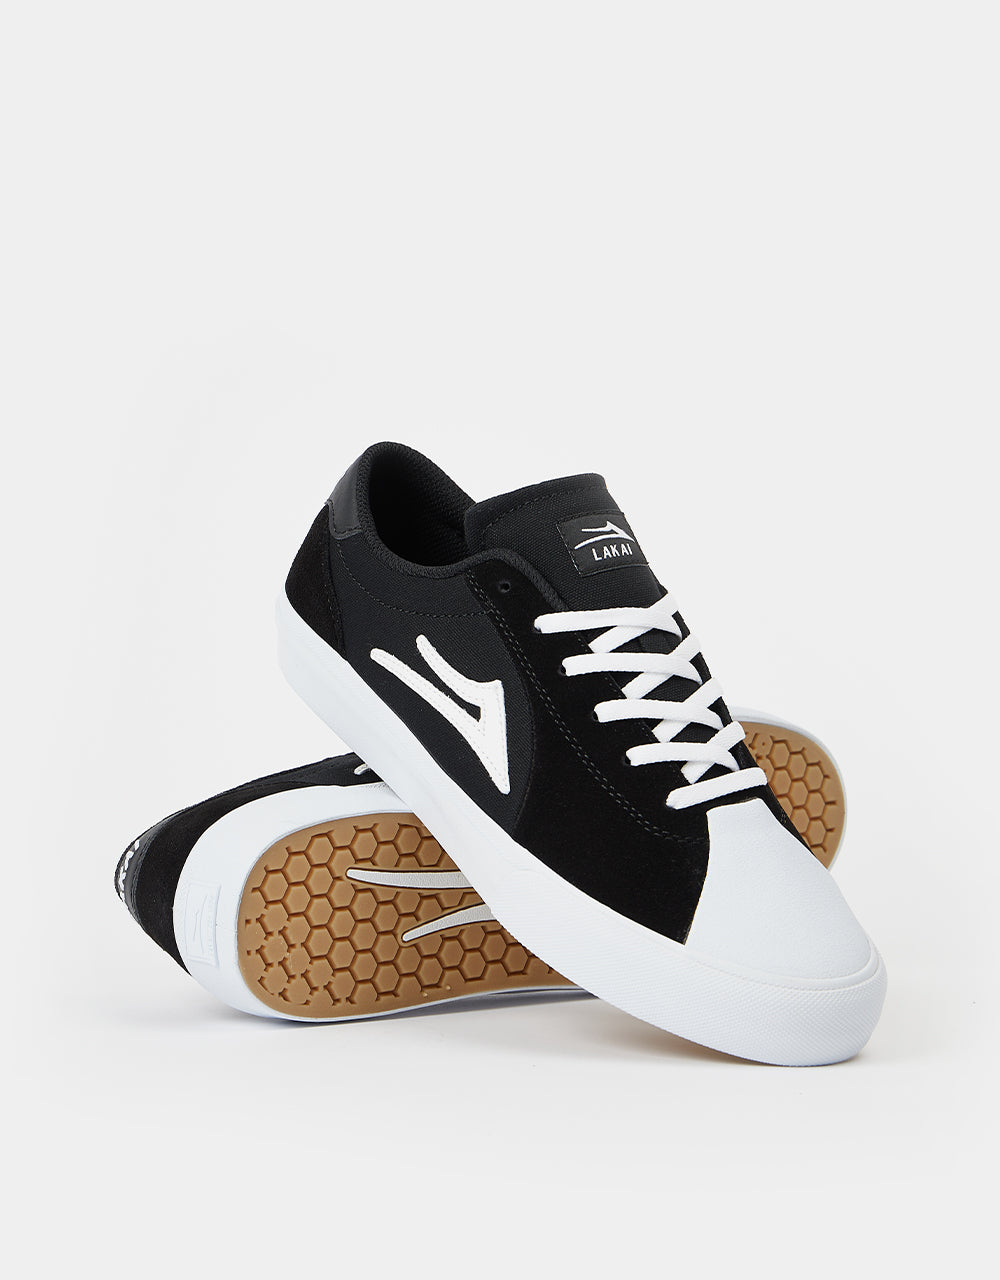 Lakai Flaco II Skate Shoes - Black/White Suede